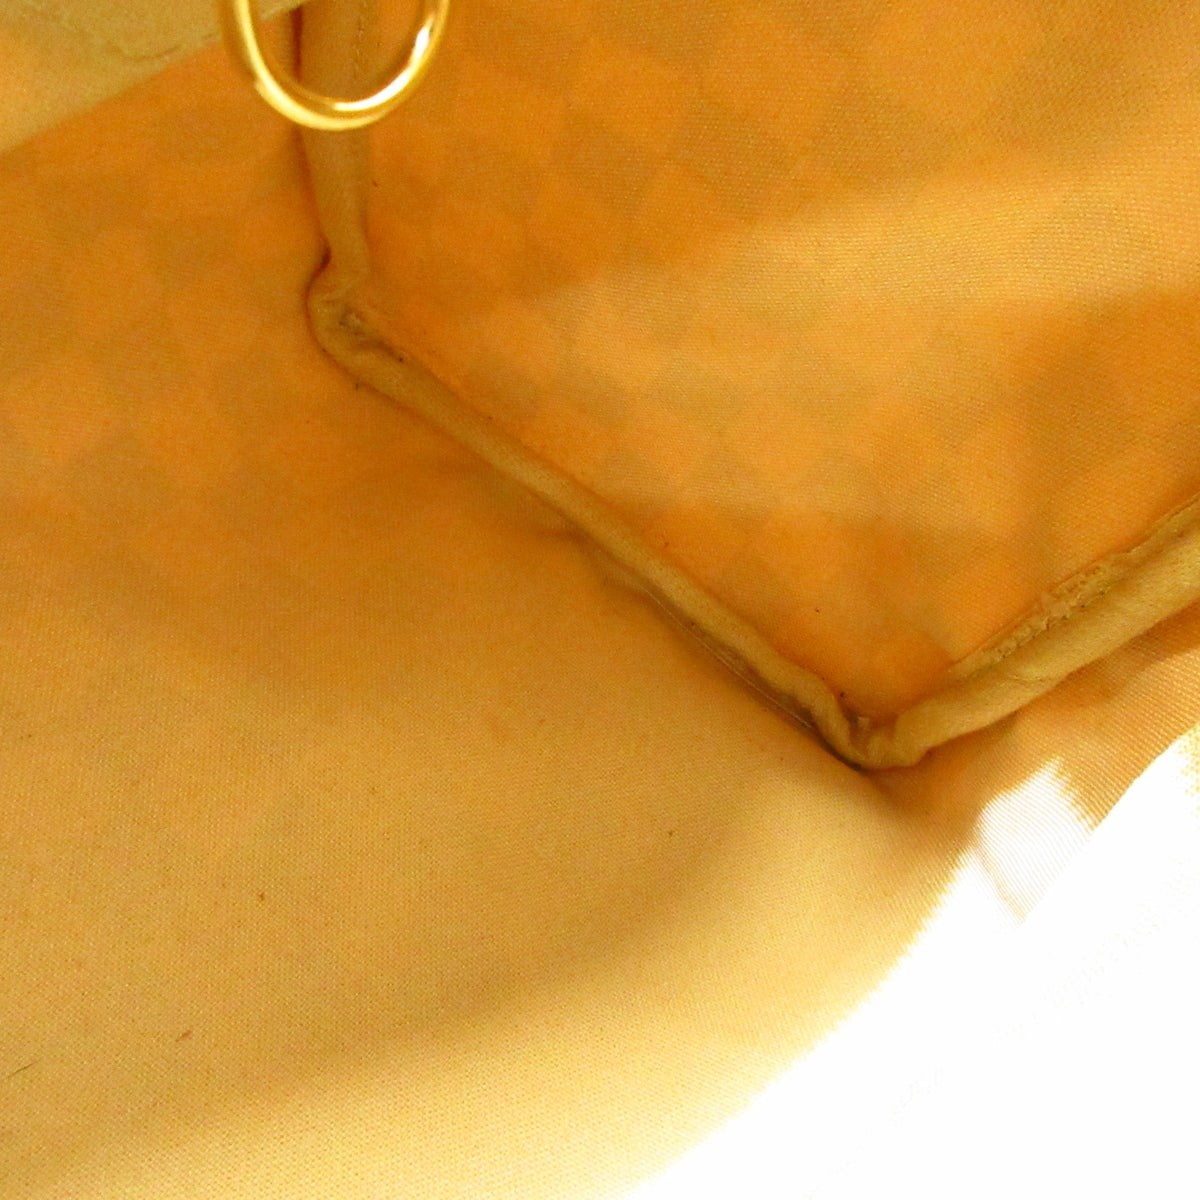 Louis Vuitton Damier Ebene Speedy 25 handbag